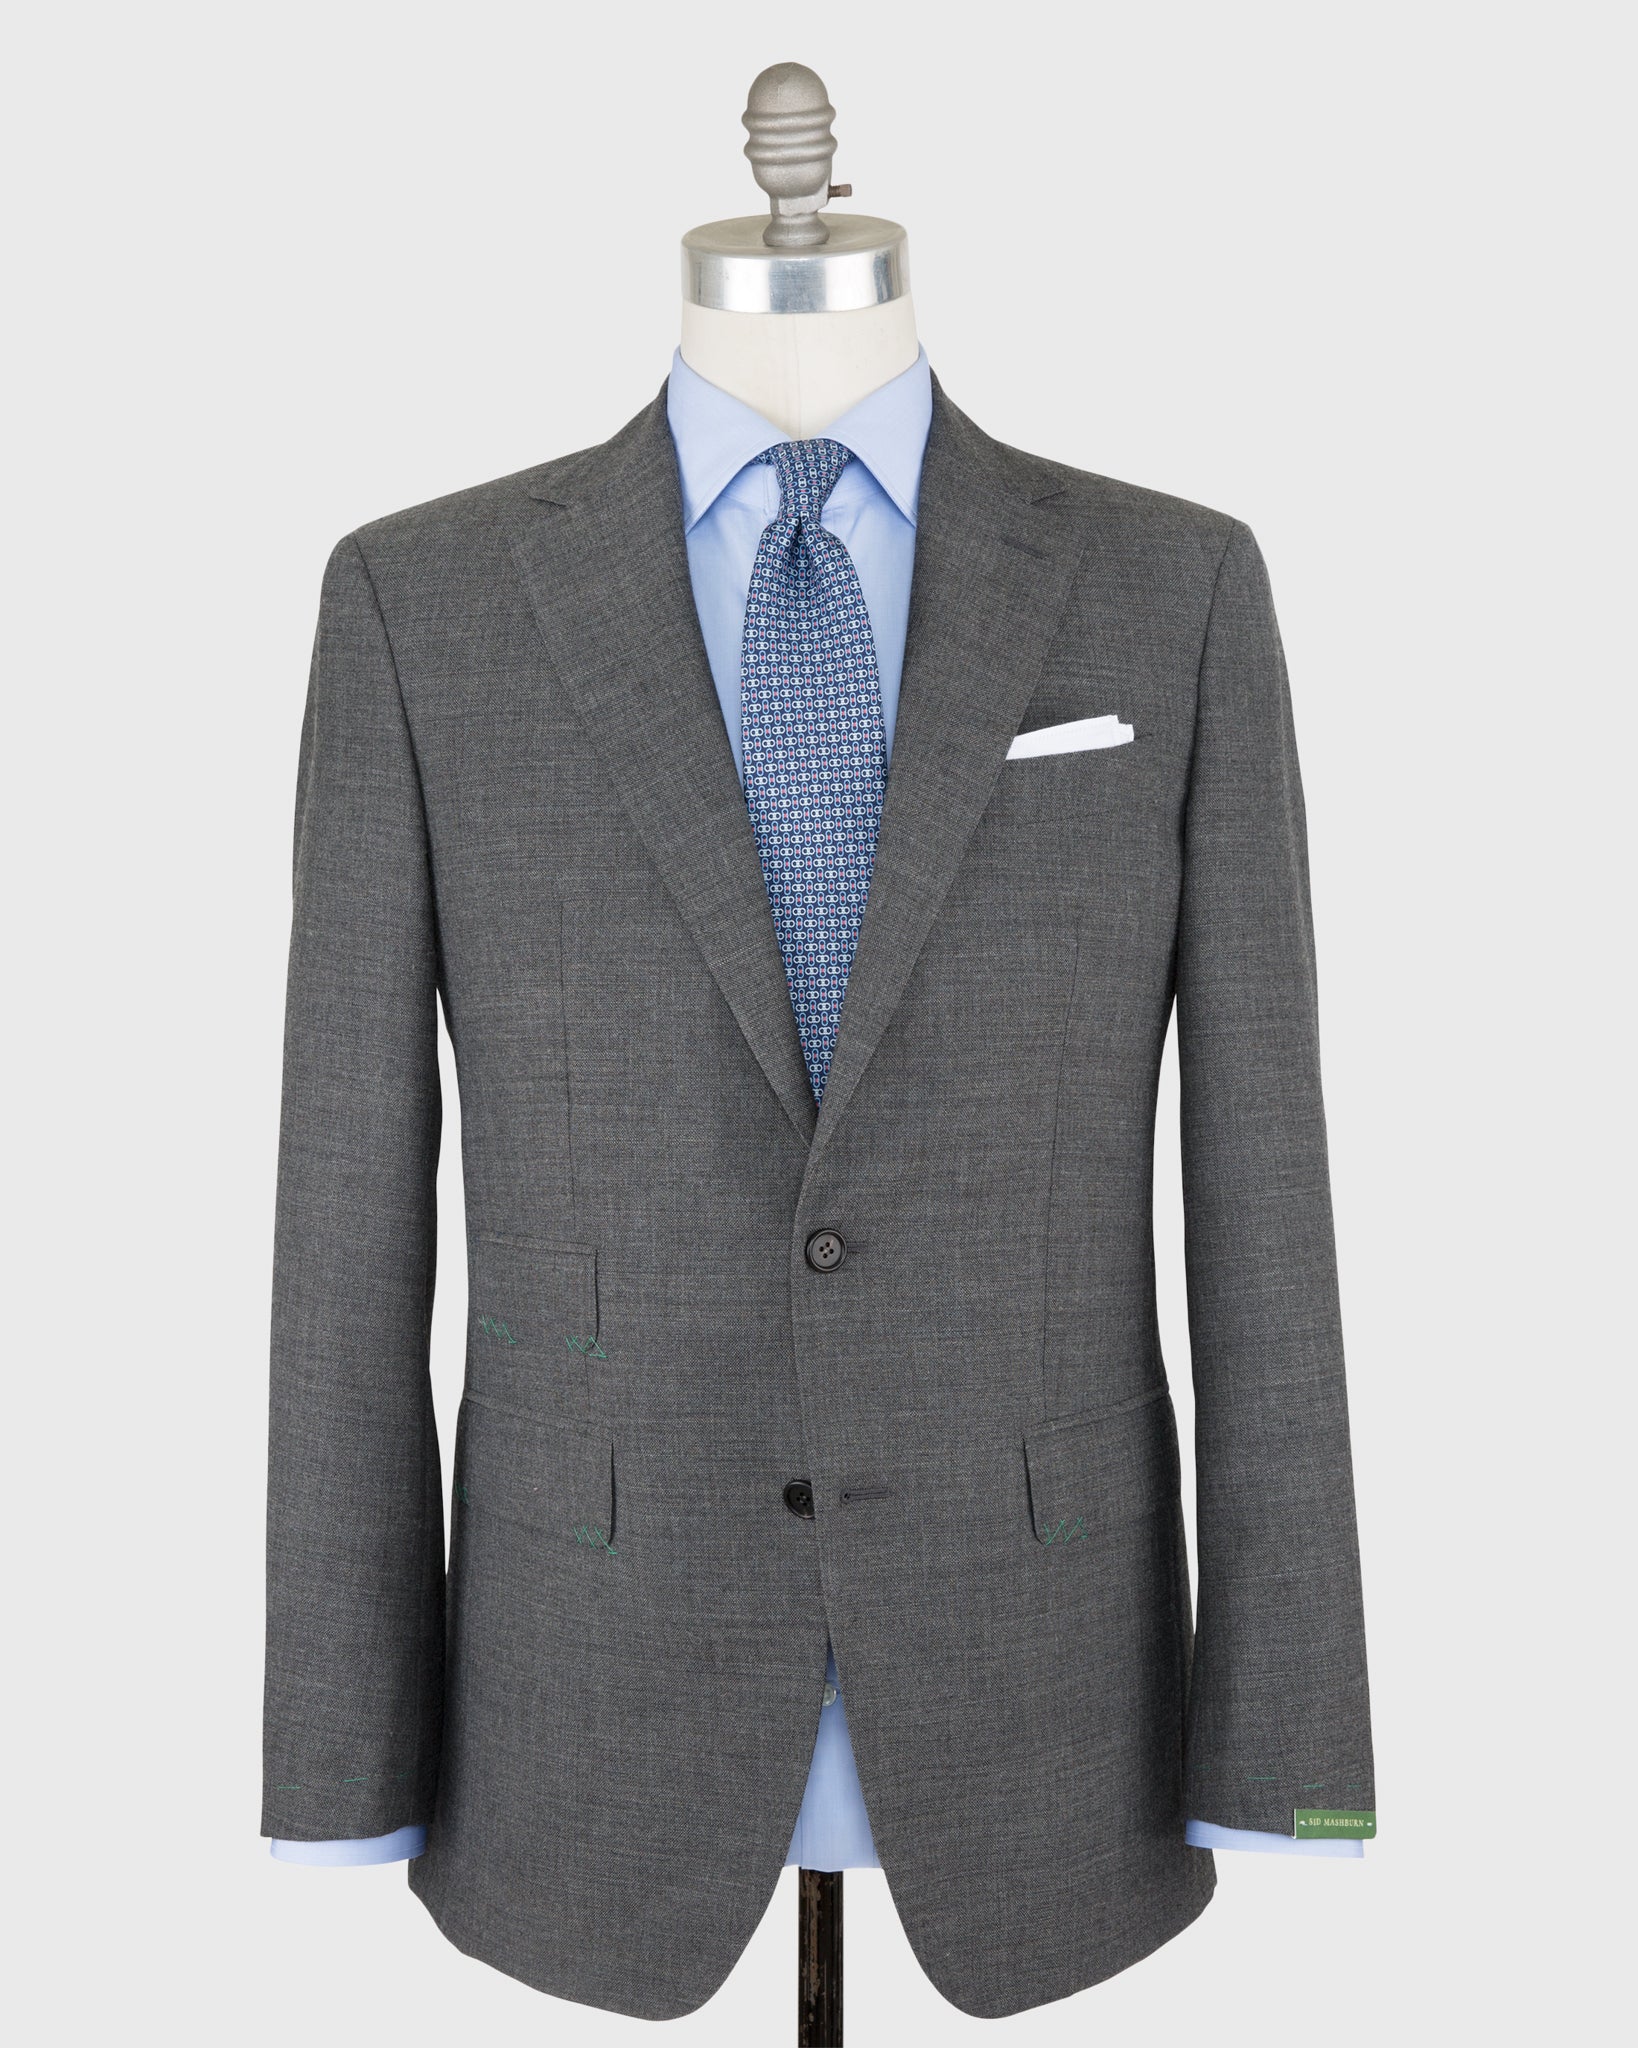 Kincaid No. 3 Suit Mid-Grey High-Twist